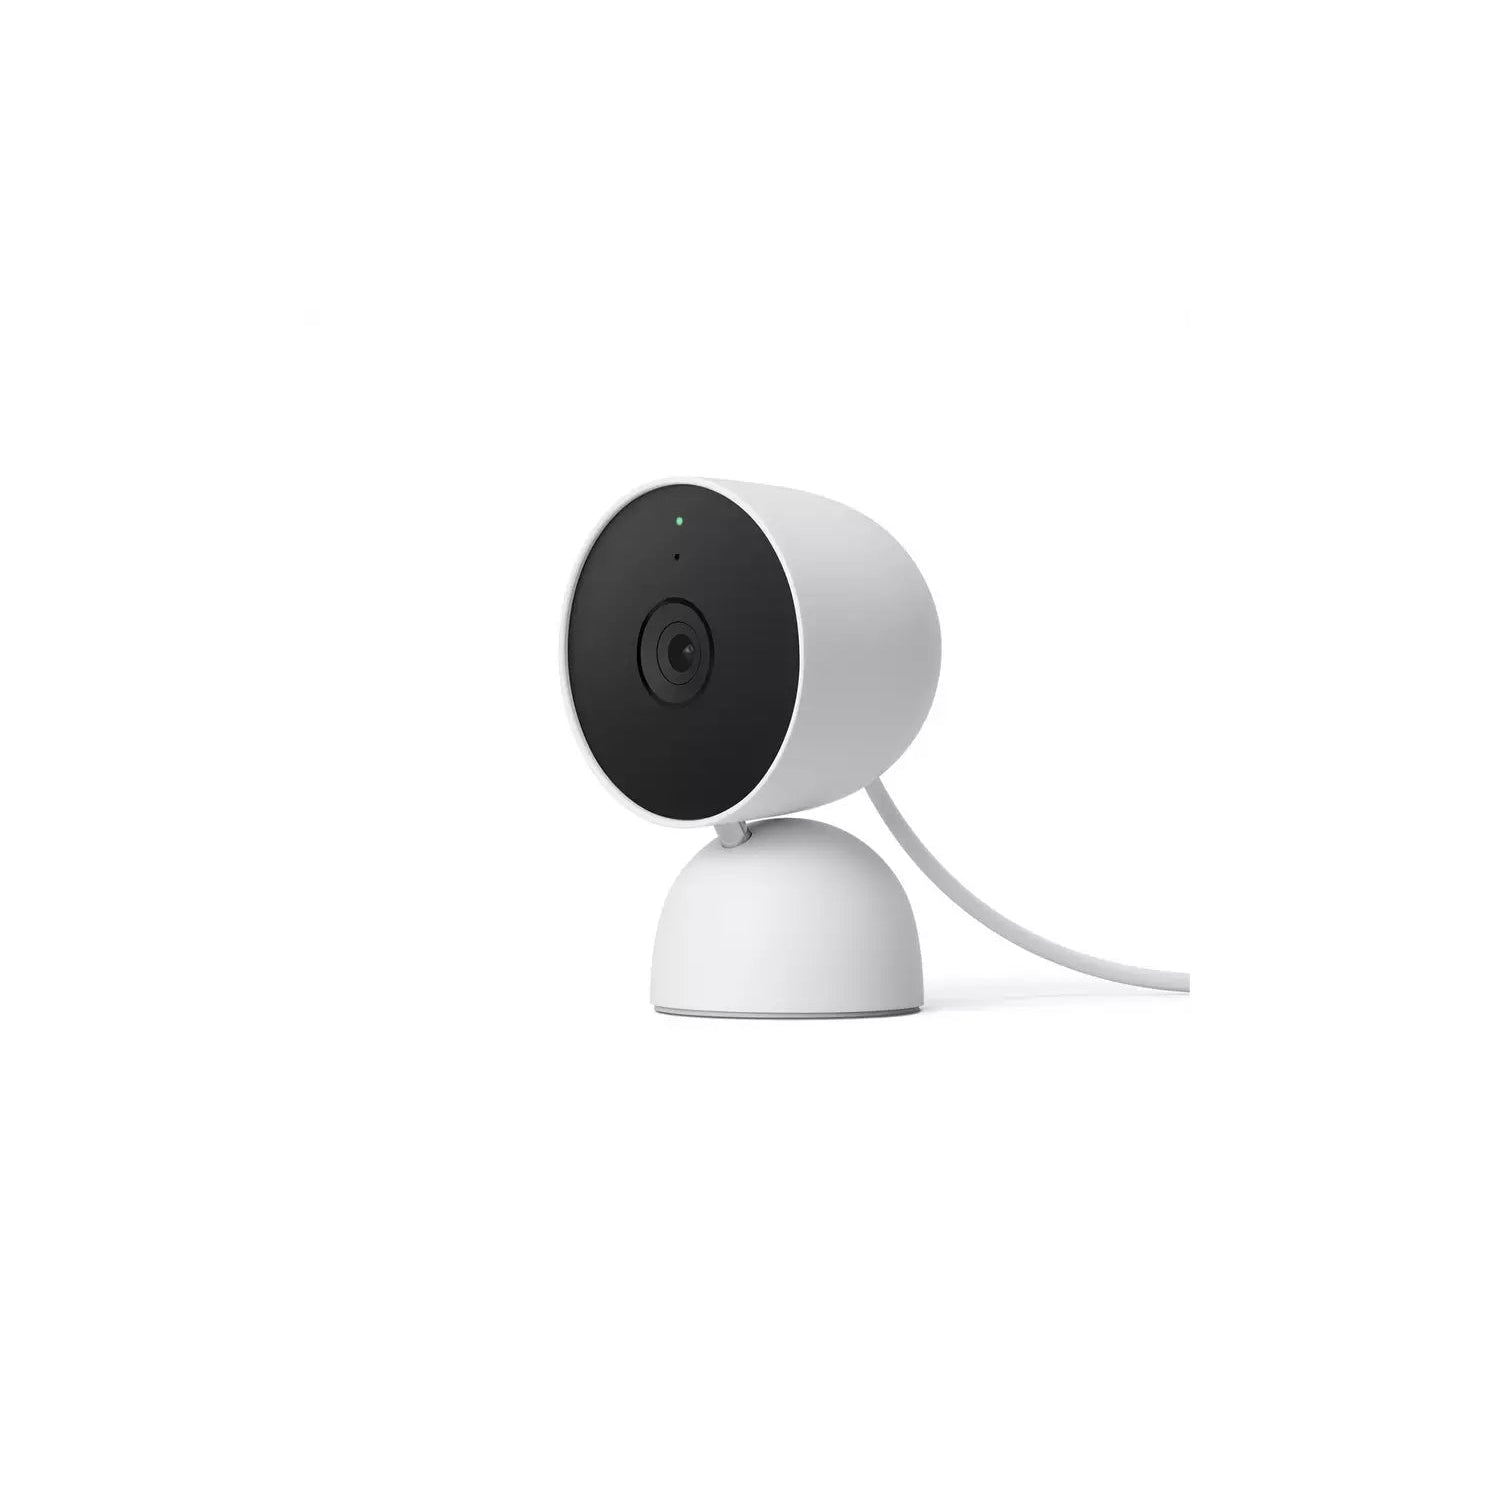 Google Nest Cam Indoor Security Camera Full HD 1080p - White - Refurbished Excellent